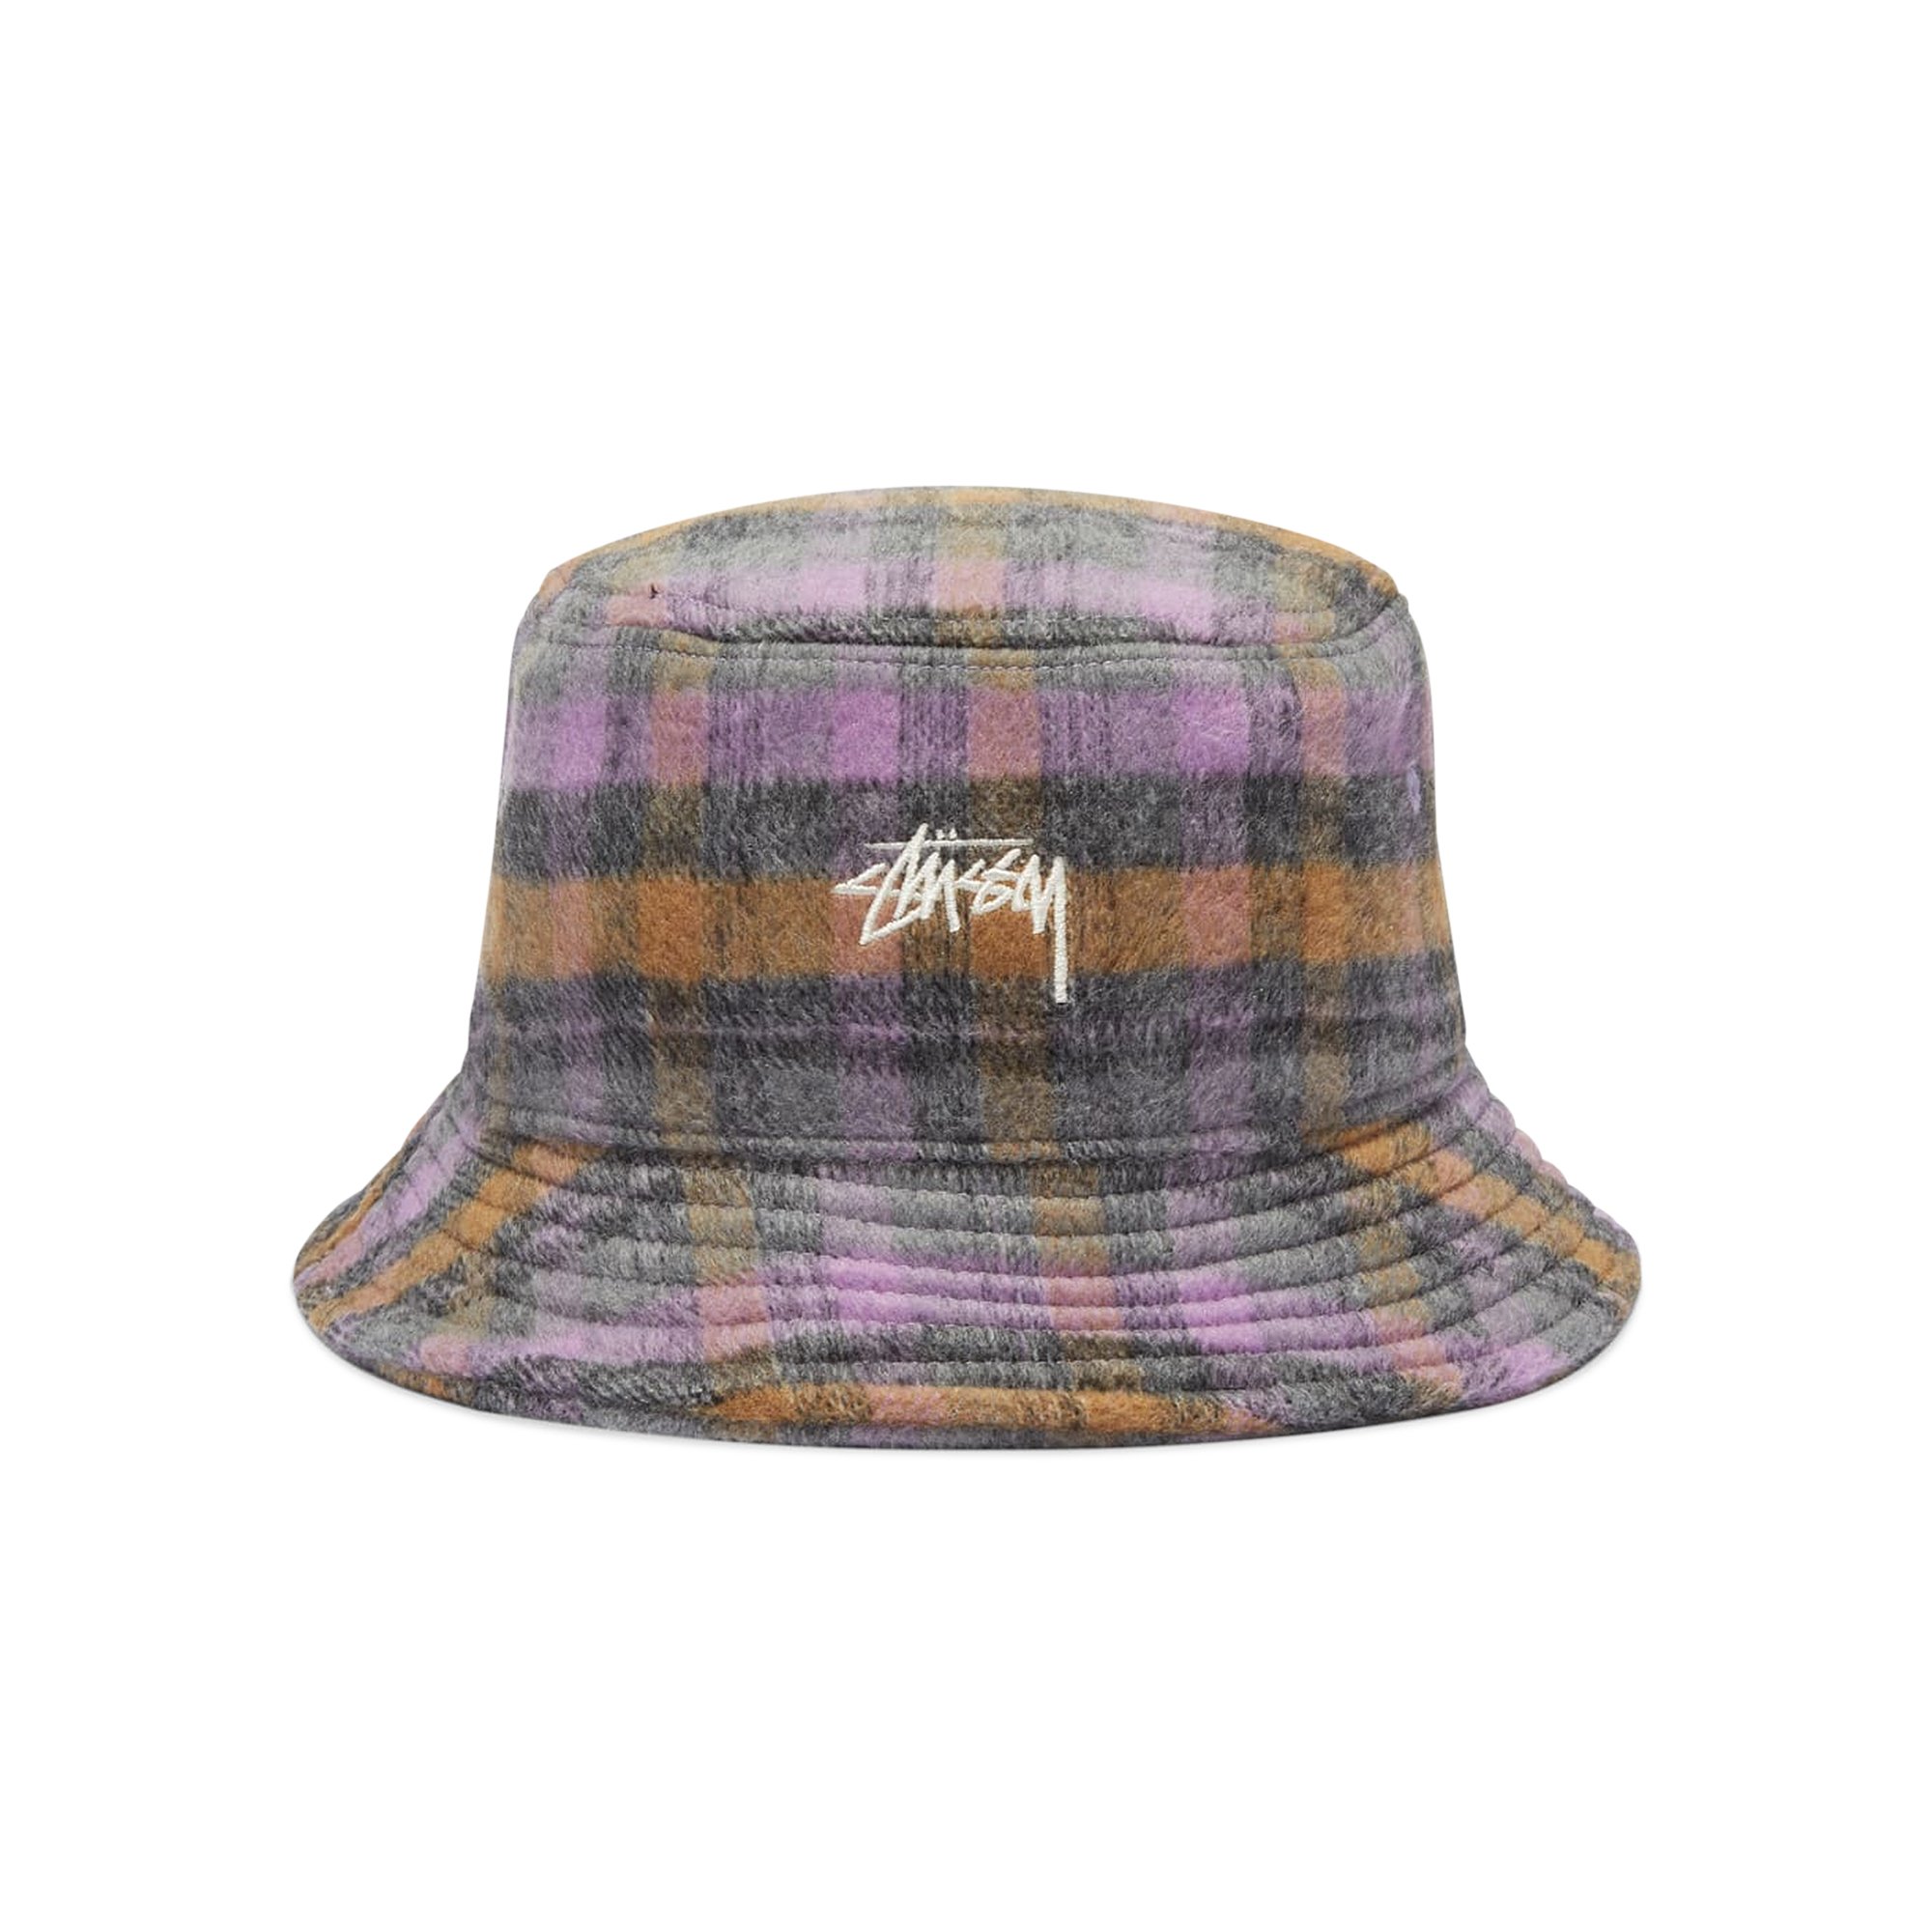 Buy Stussy Brushed Plaid Bucket Hat 'Purple' - 1321084 PURP | GOAT